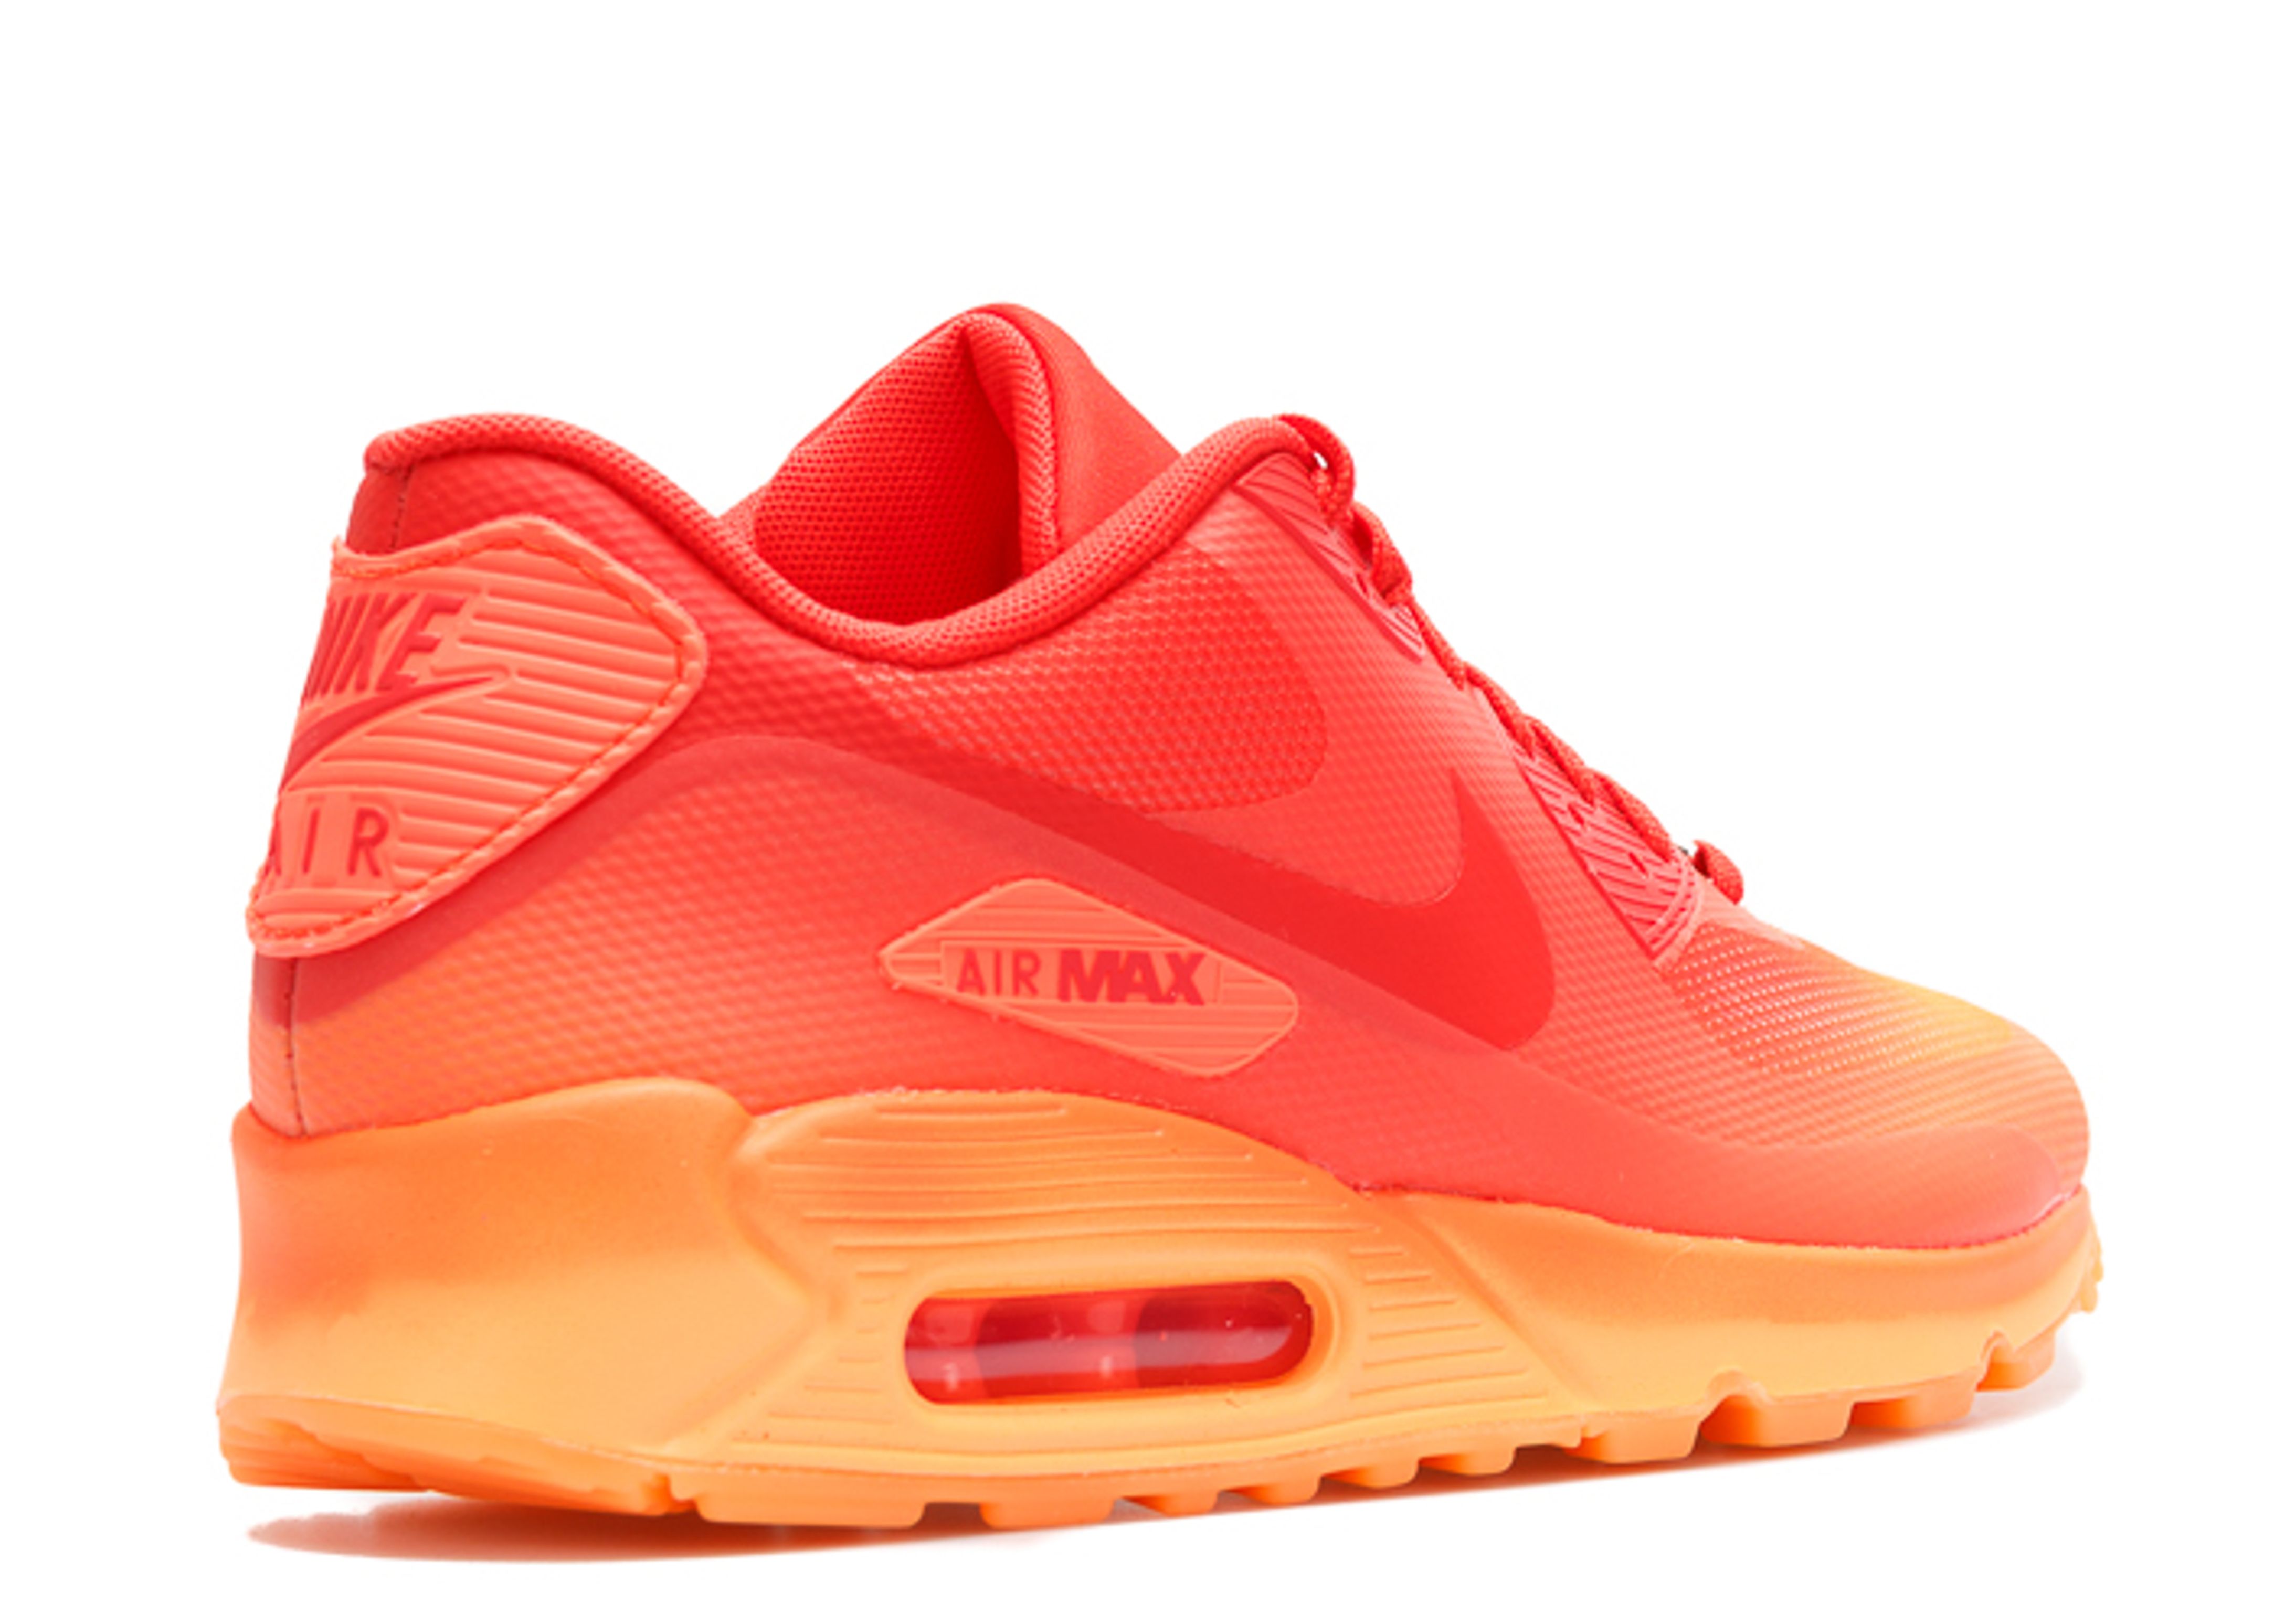 Wmns Air Max HYP 'Aperitivo' - Nike - 813151 800 - hyper orange/chilling red-atomic orange | Flight Club